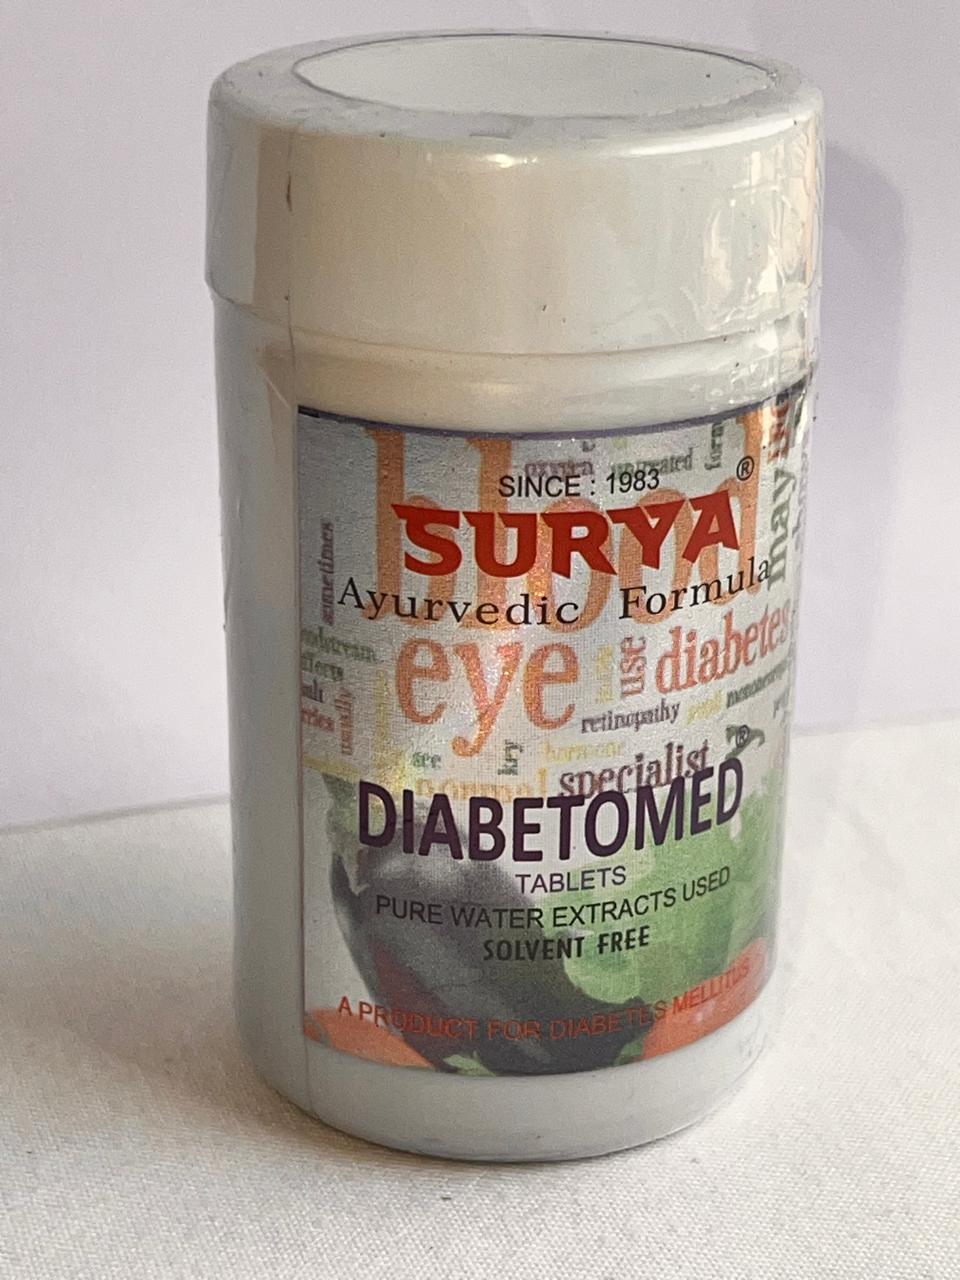 Diabetomed tablets